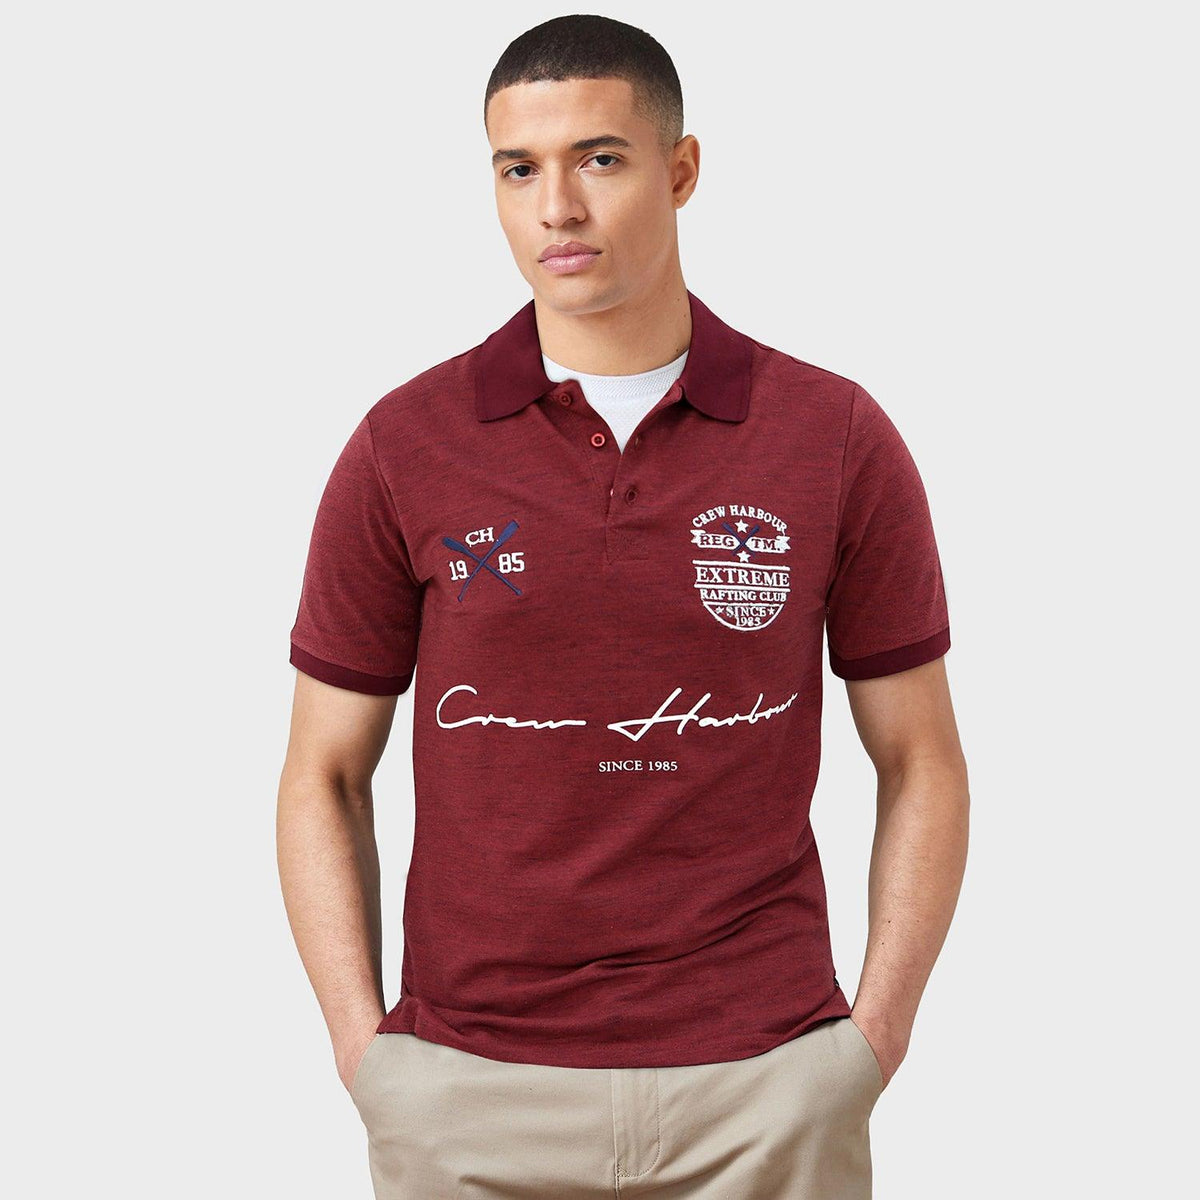 Mens Burgundy Premium Quality Slim Fit Embellished Embroidered Pique Polo Shirt (CR-11252) - Brands River